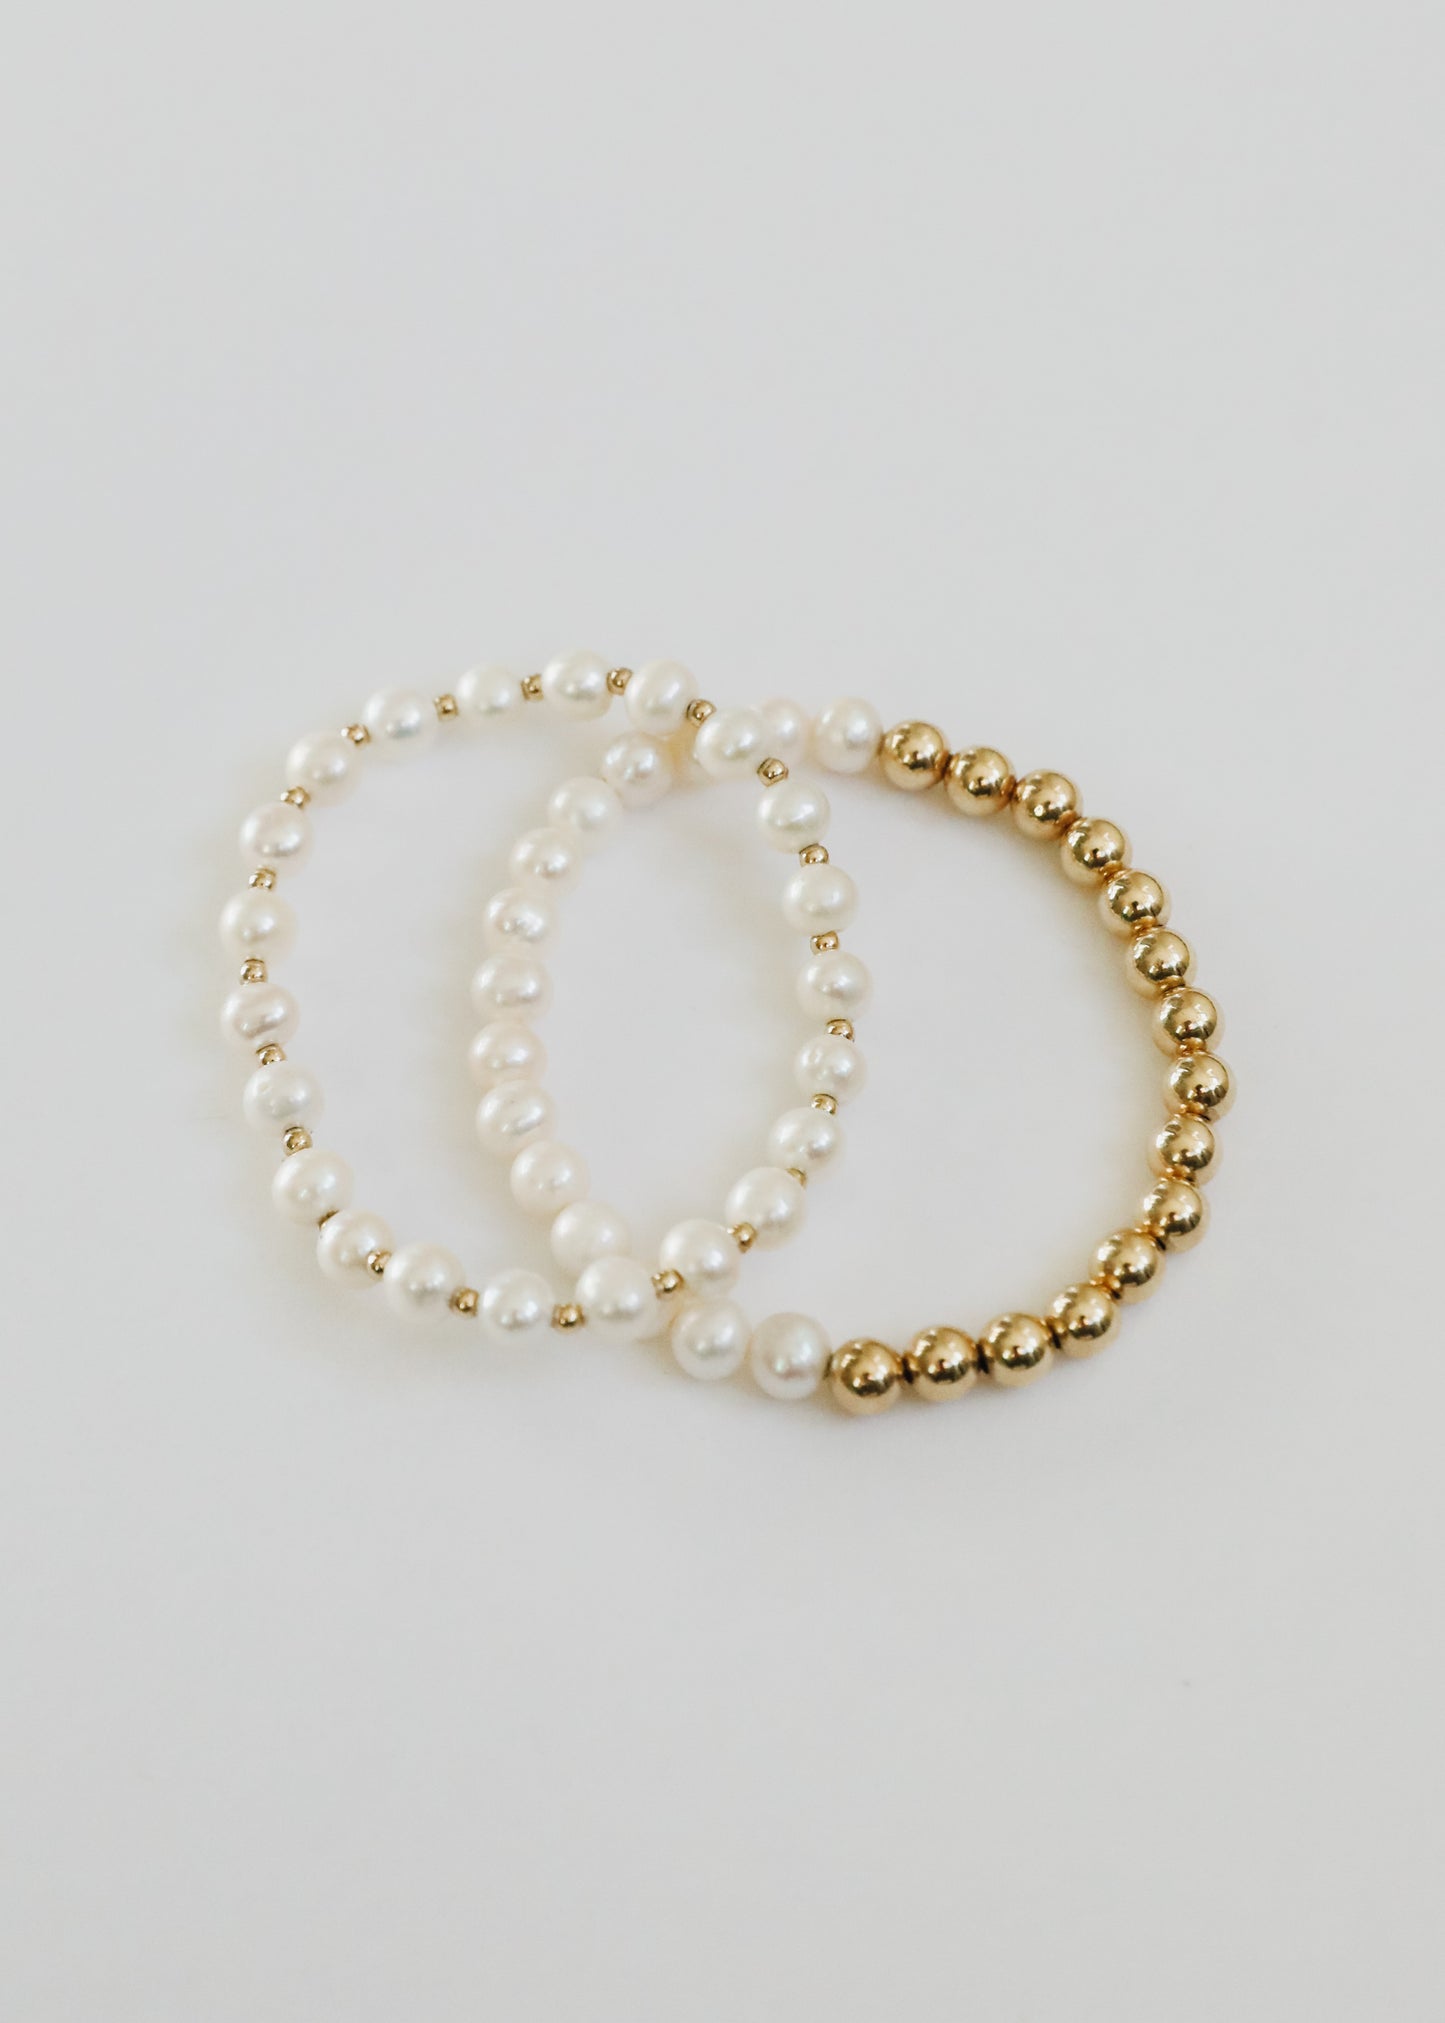 Pearl : Gold Sun + Moon || Adult Bracelets